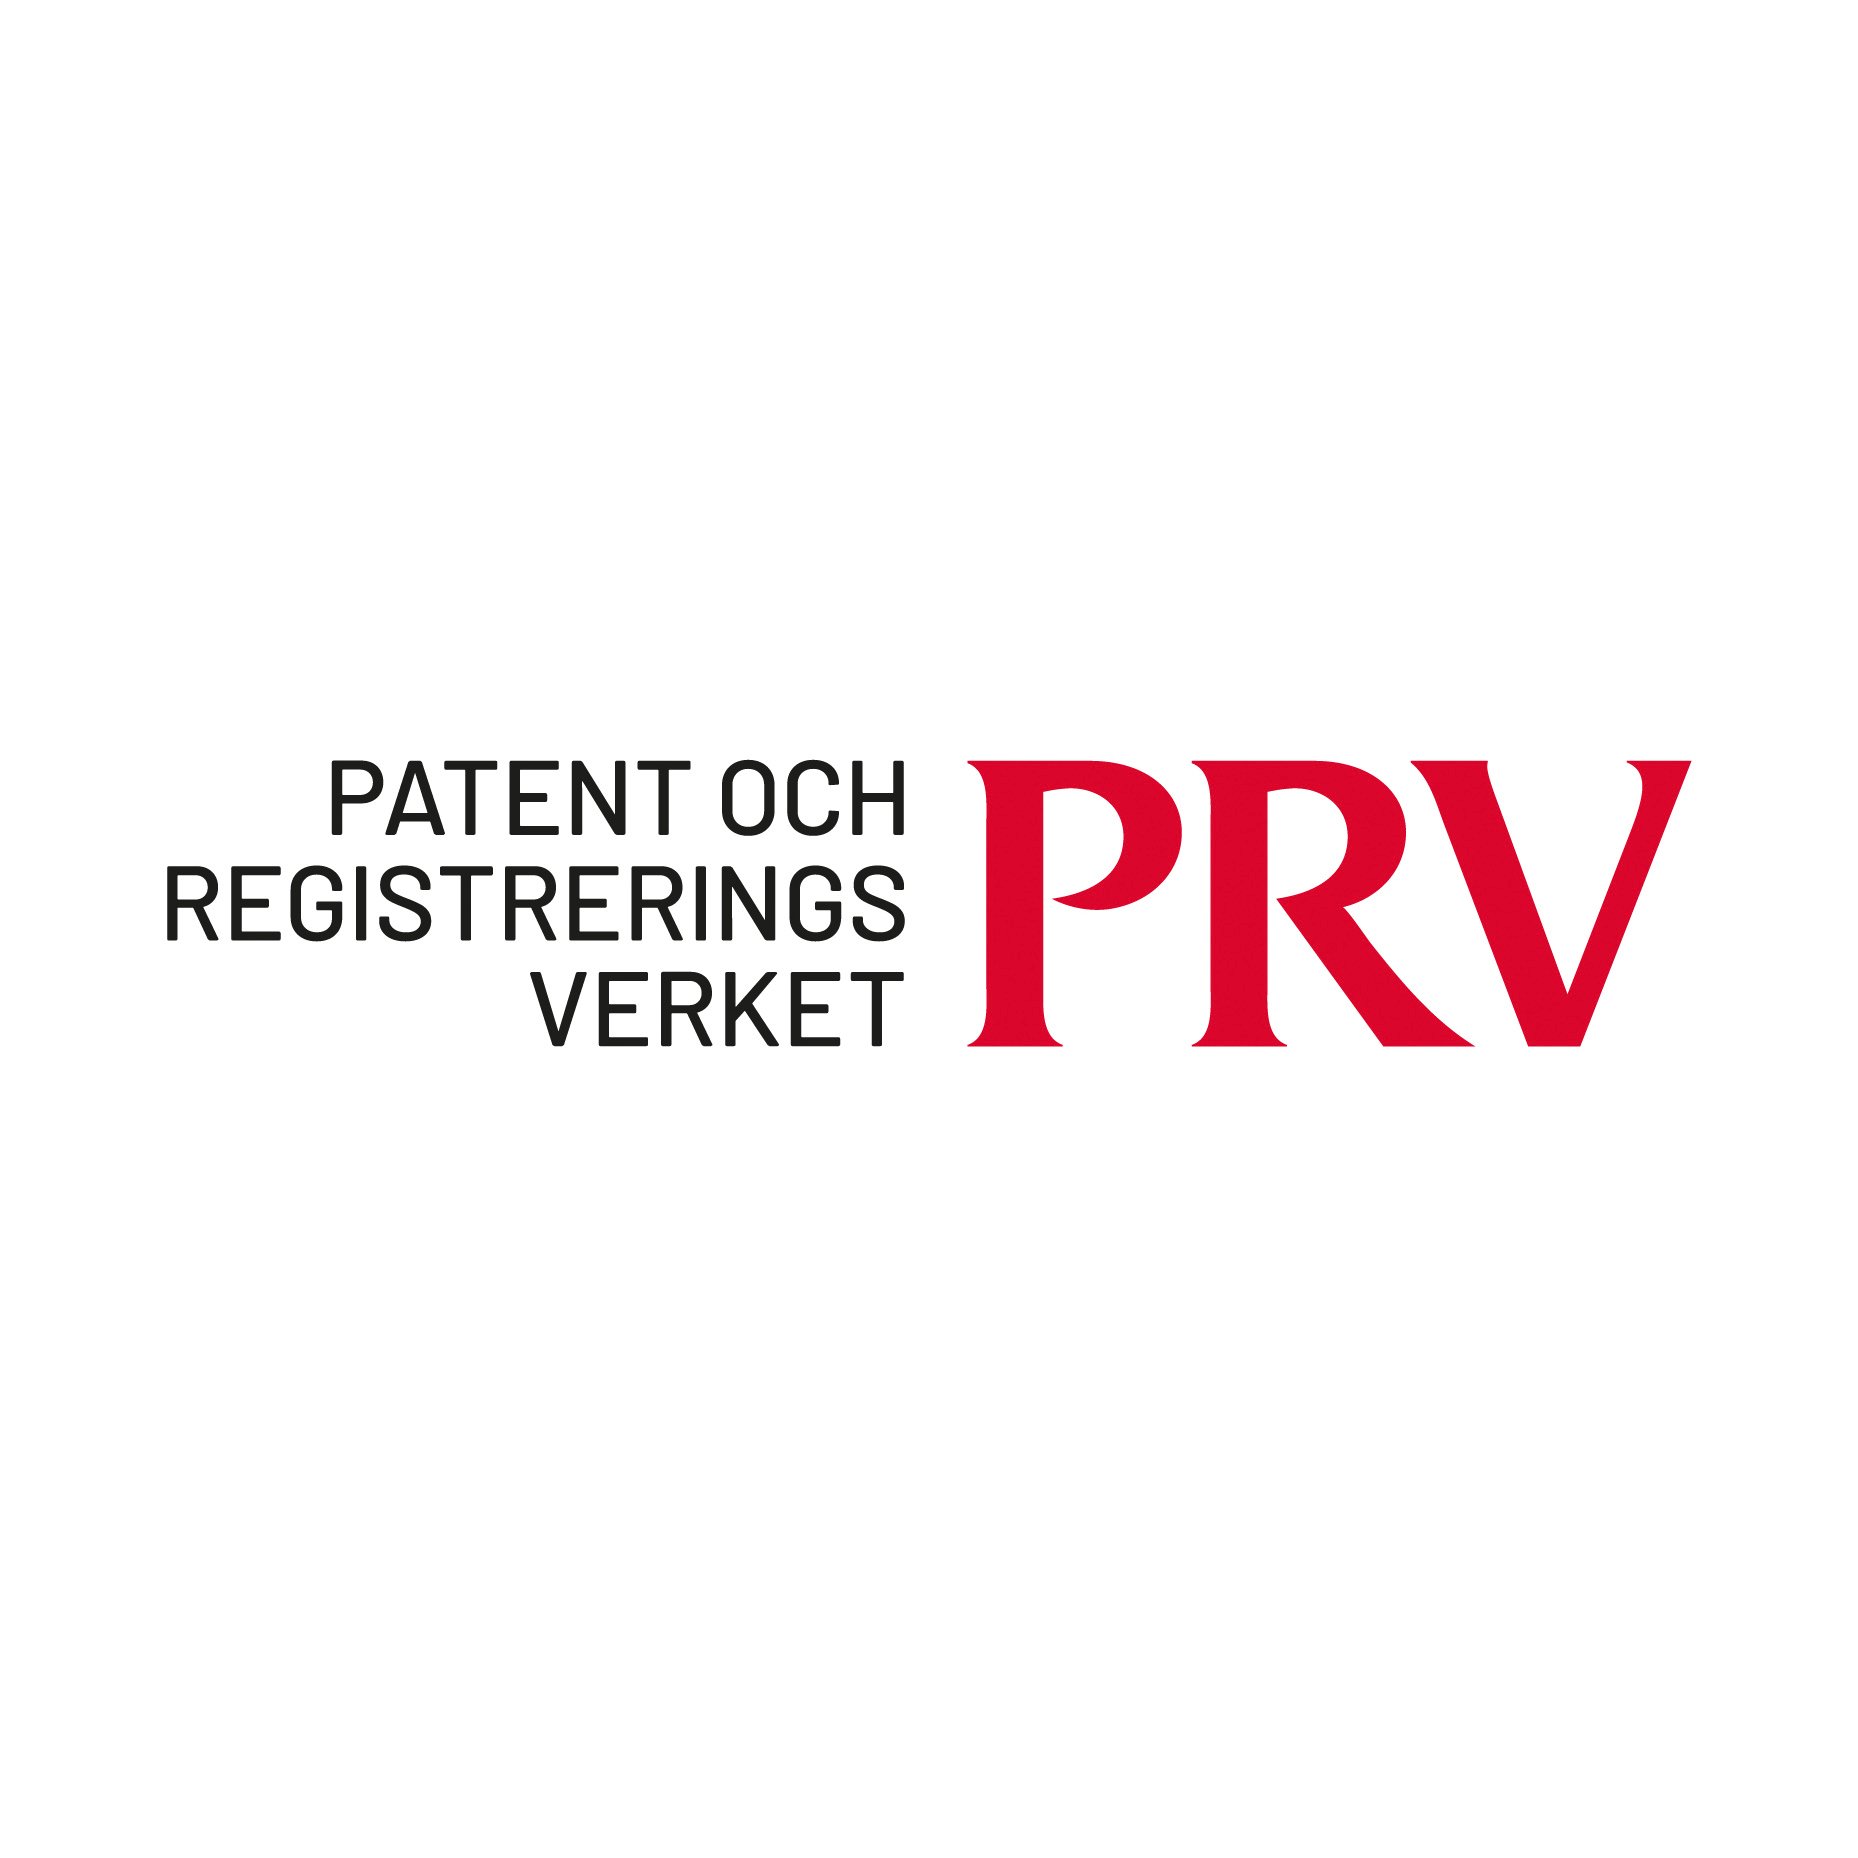 PRV - Patent- och registreringsverket